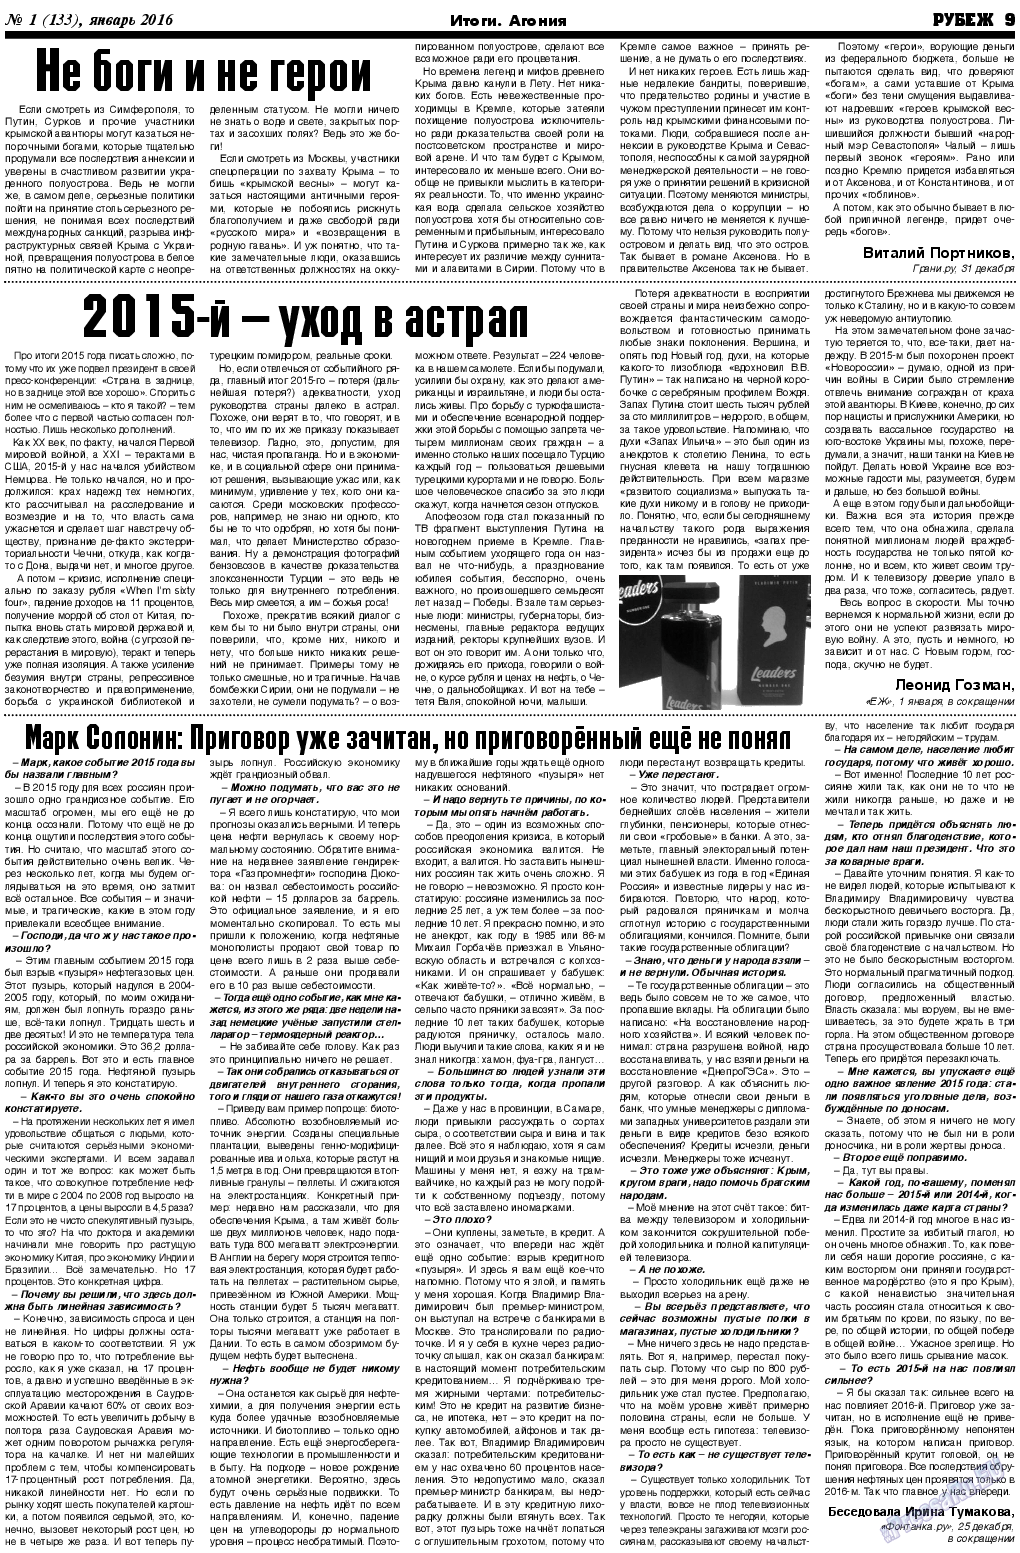 Рубеж, газета. 2016 №1 стр.9